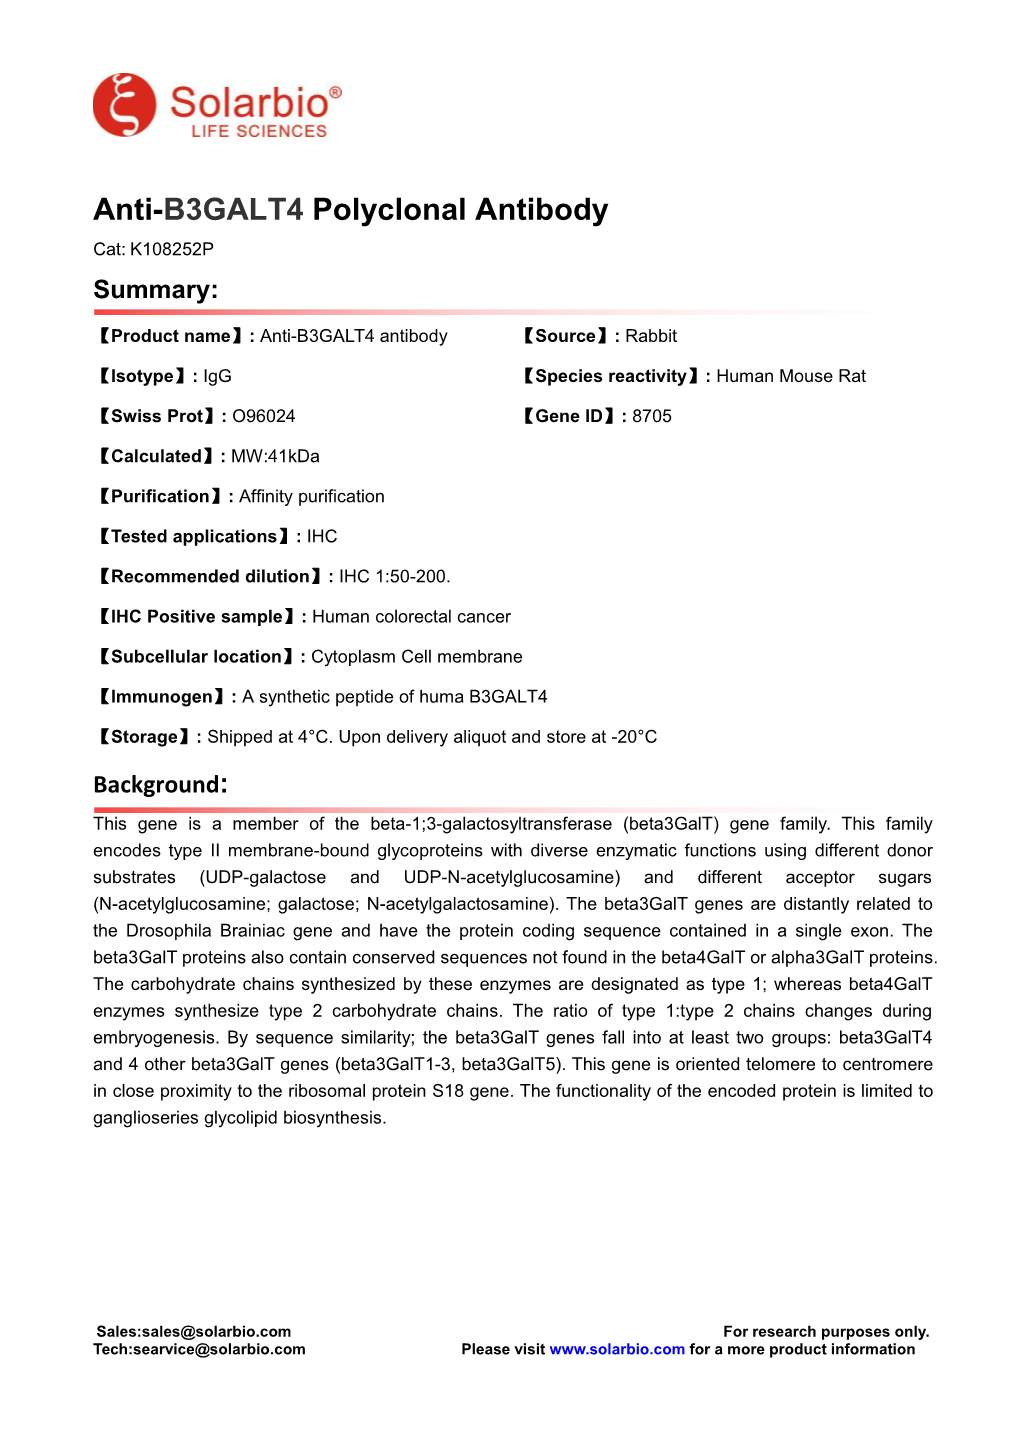 Anti-B3GALT4 Polyclonal Antibody Cat: K108252P Summary